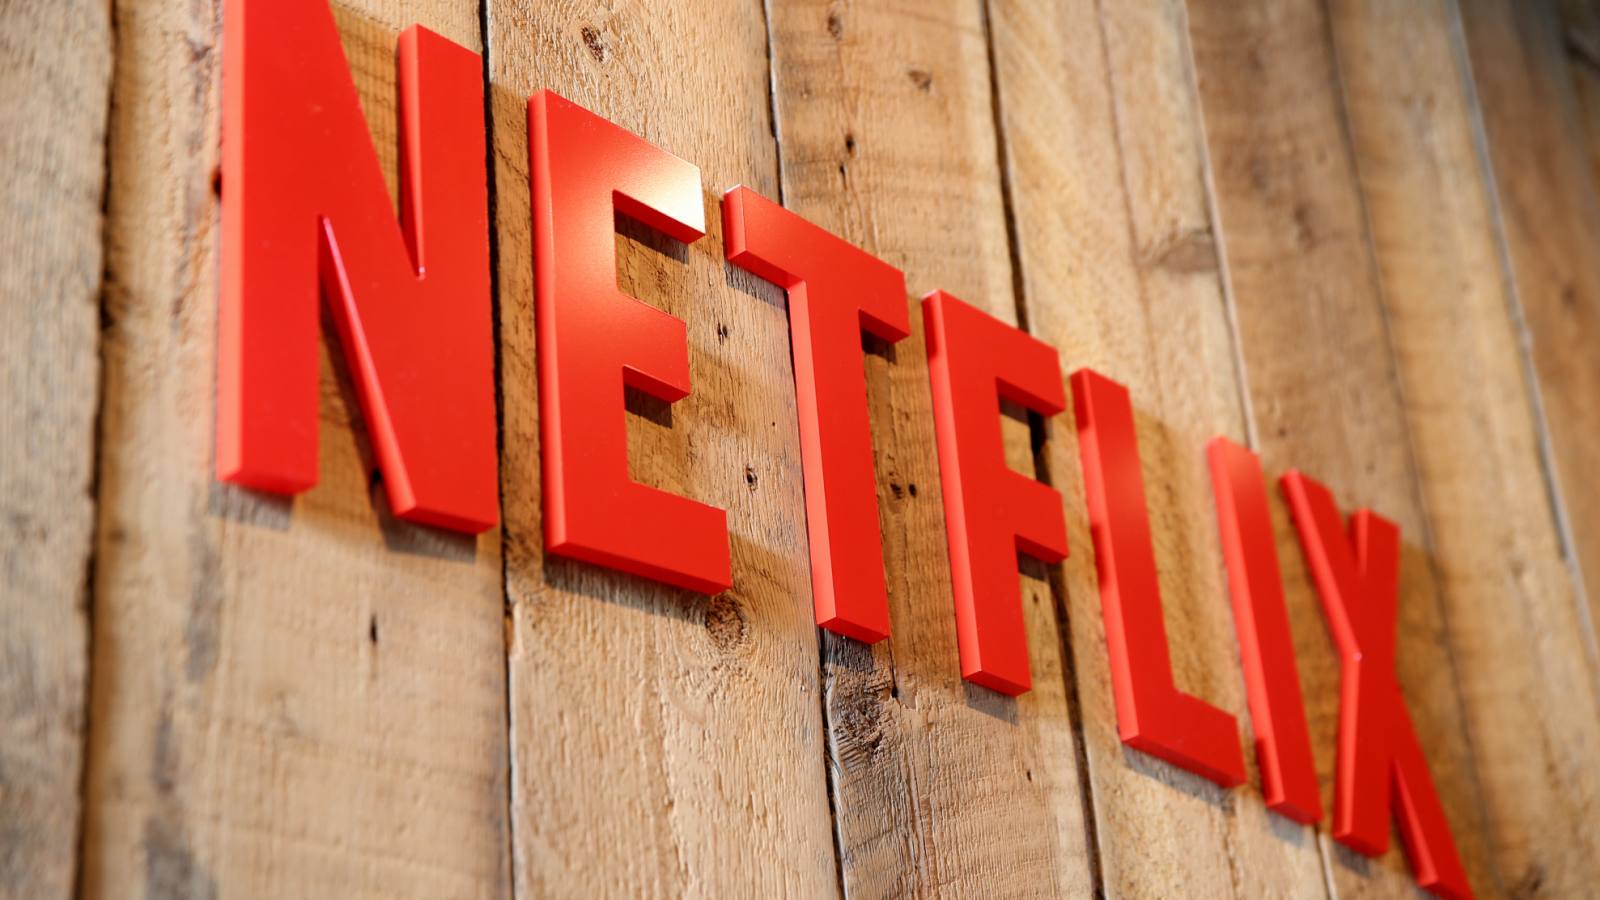 Netflix sets sights on Kenya's nascent movie streaming market